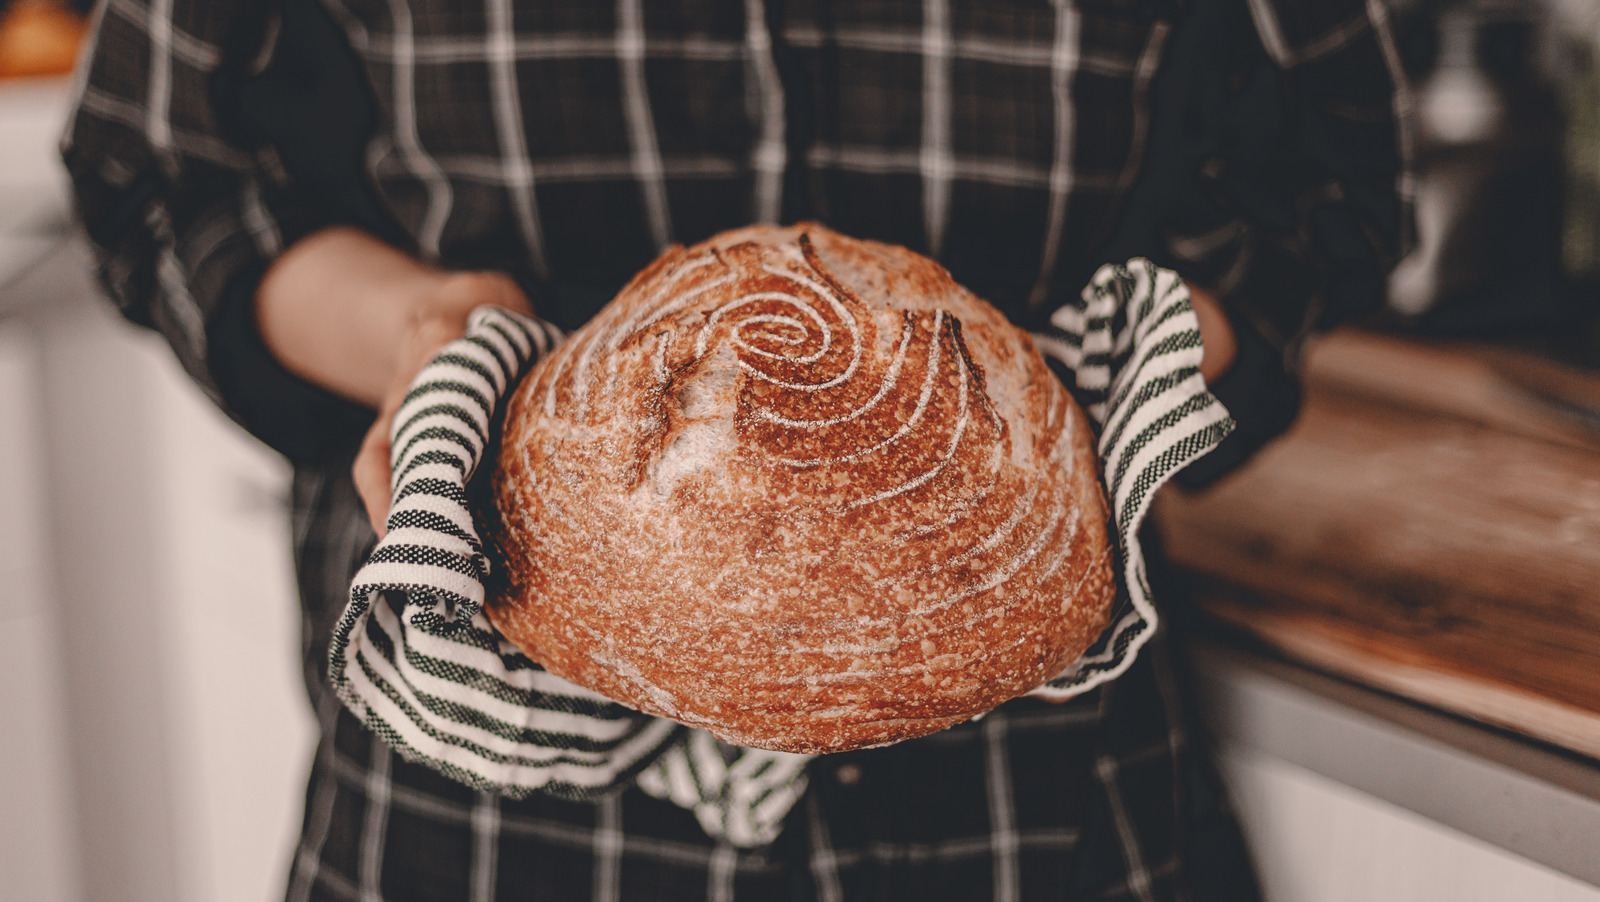 https://www.tastingtable.com/img/gallery/x-ways-to-make-homemade-bread-better/l-intro-1639080866.jpg